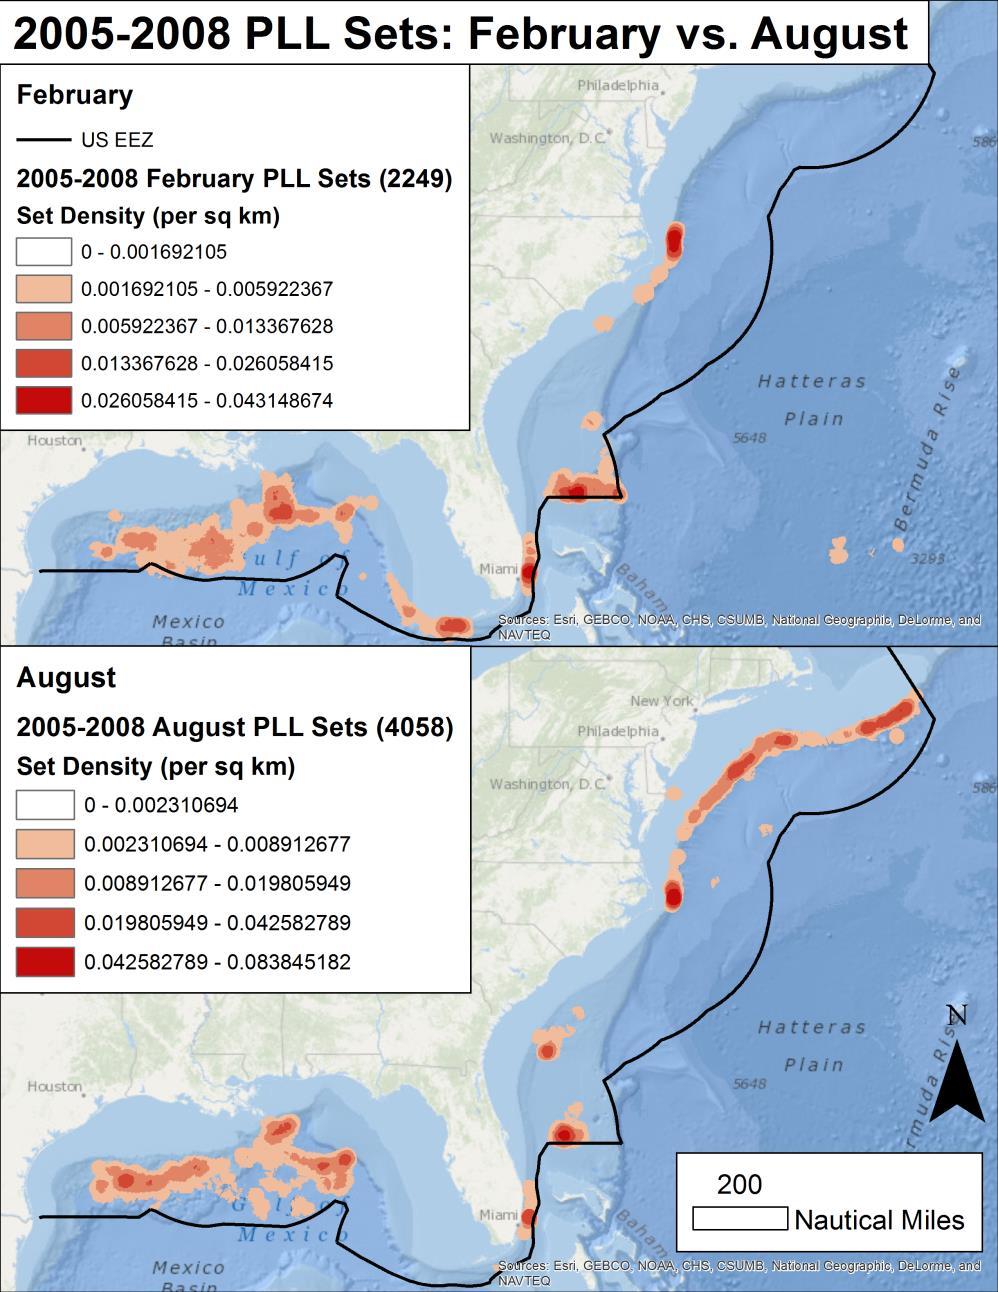 Figure 6: Seasonal patterns in Atlantic HMS commercial pelagic longline fishing effort for February and August (2005-2008).